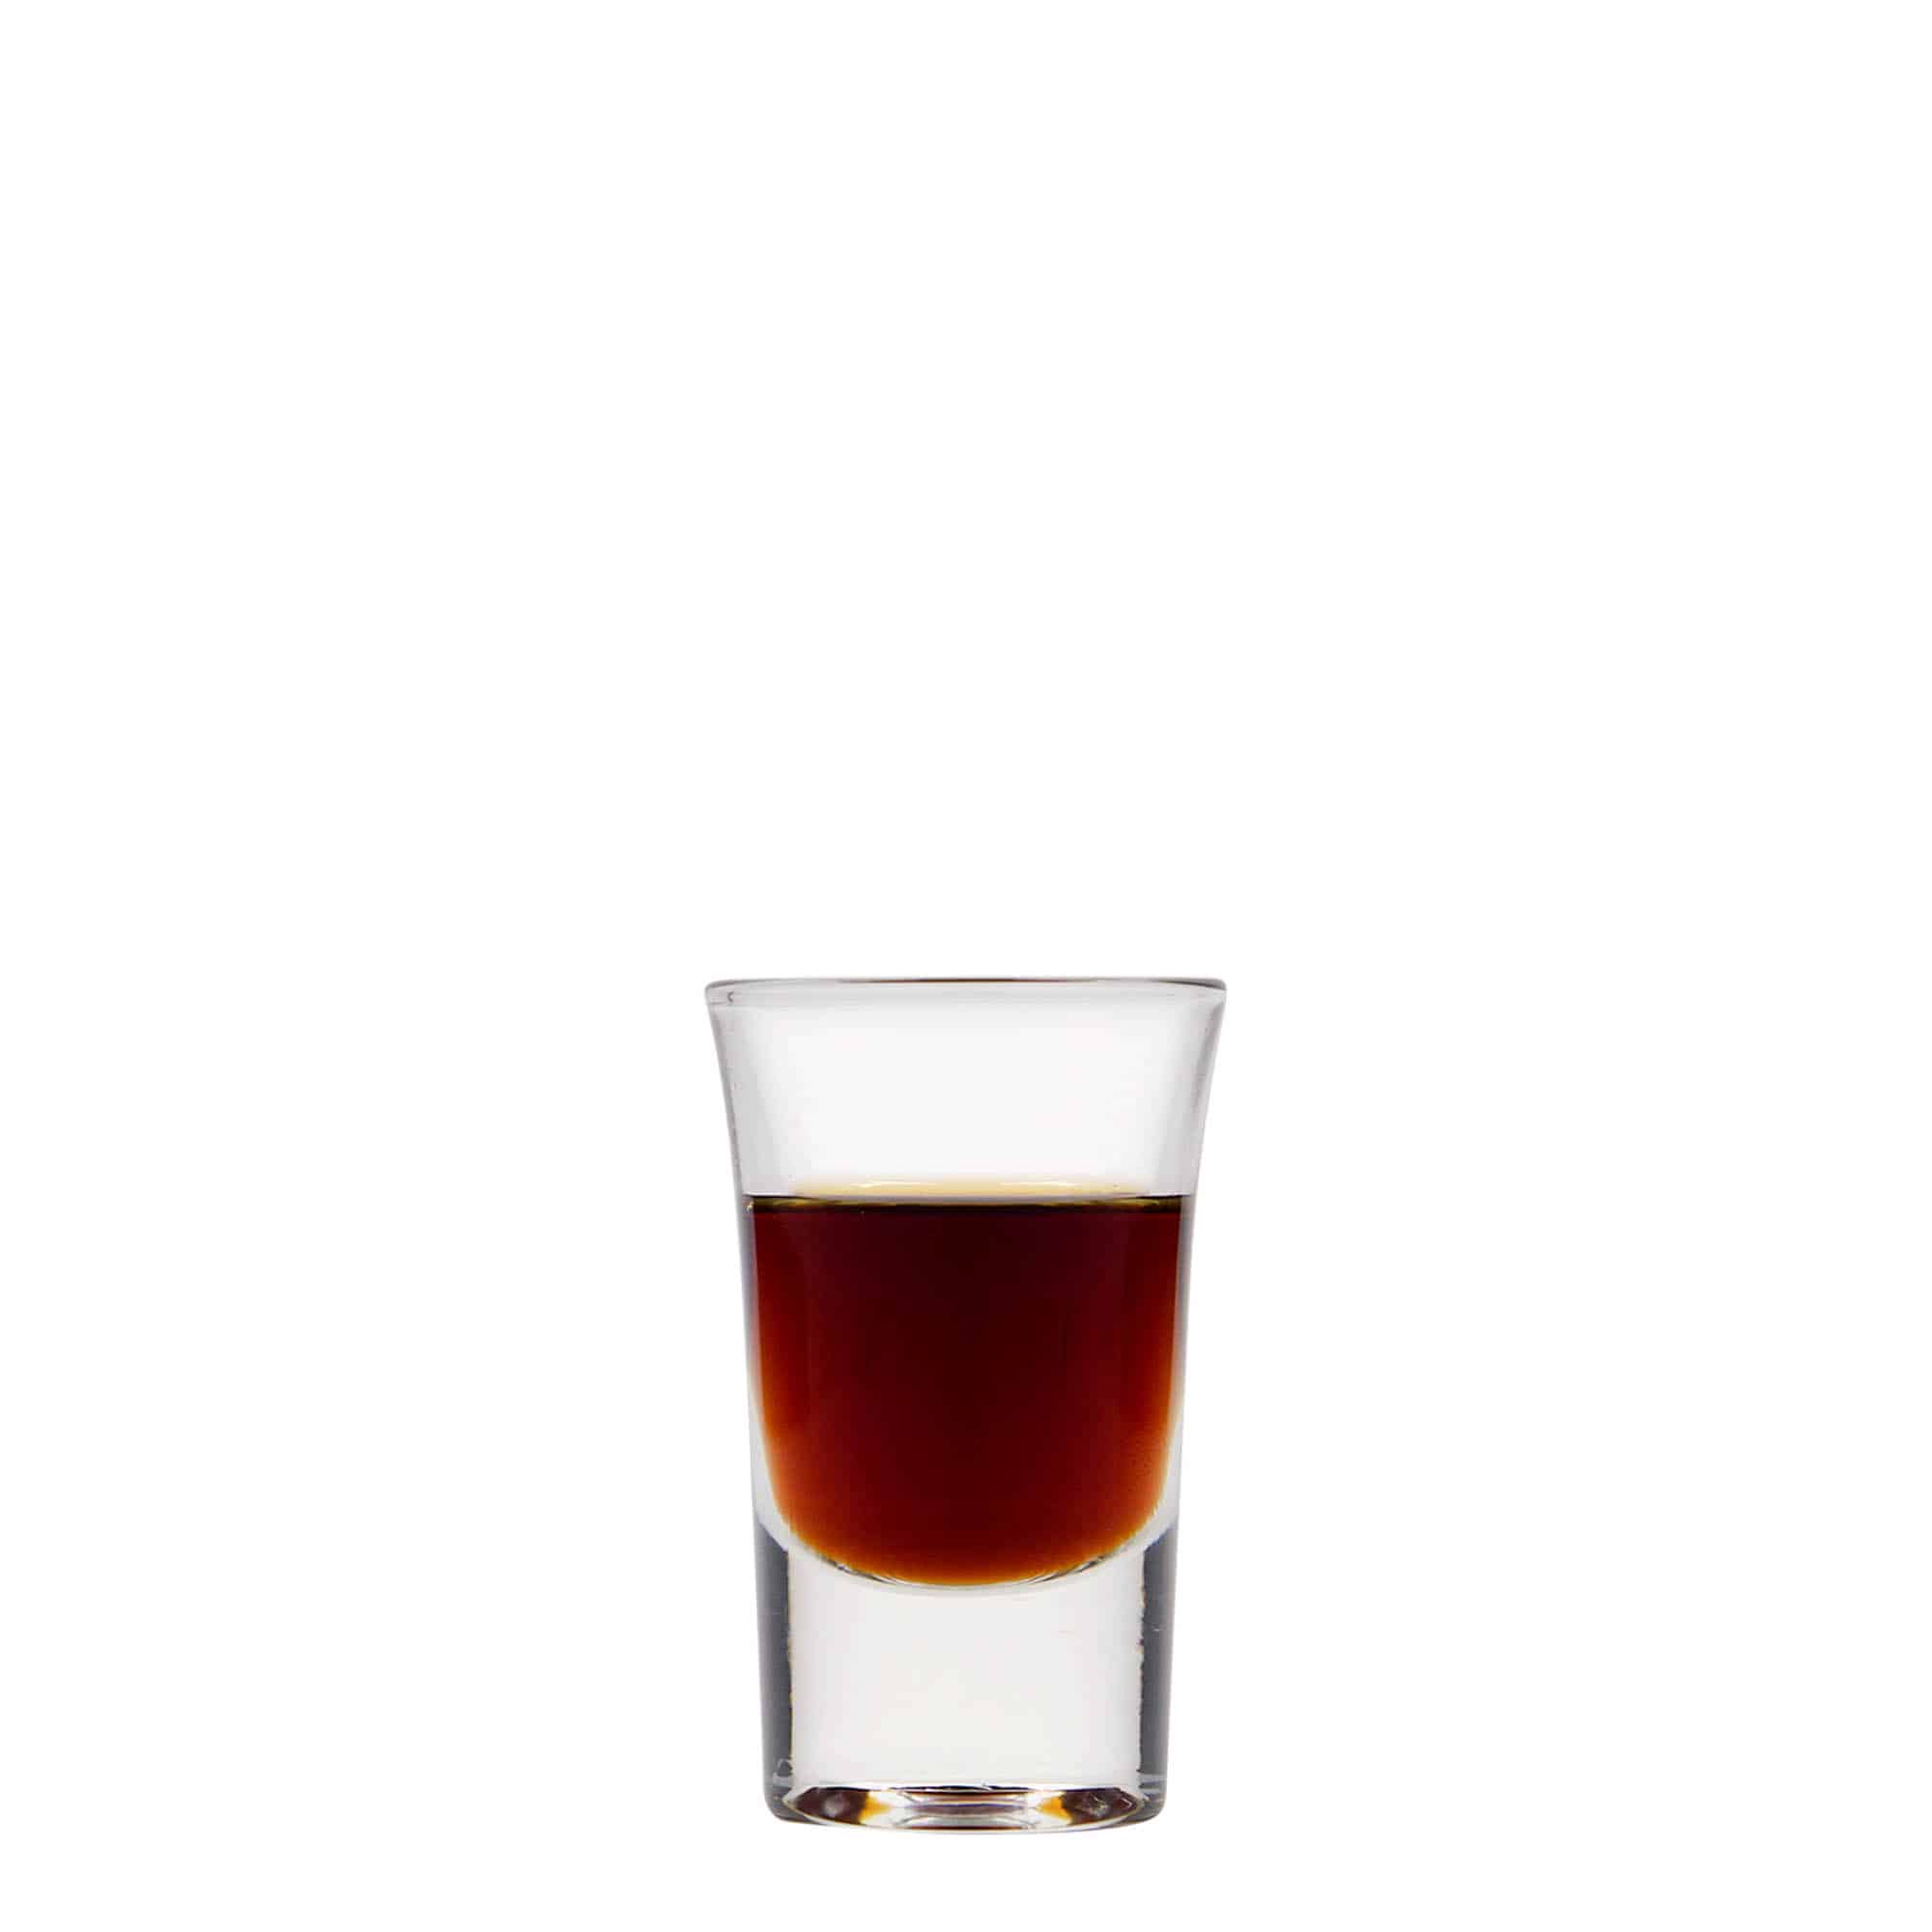 20 ml shot glass 'Juniorstamper'